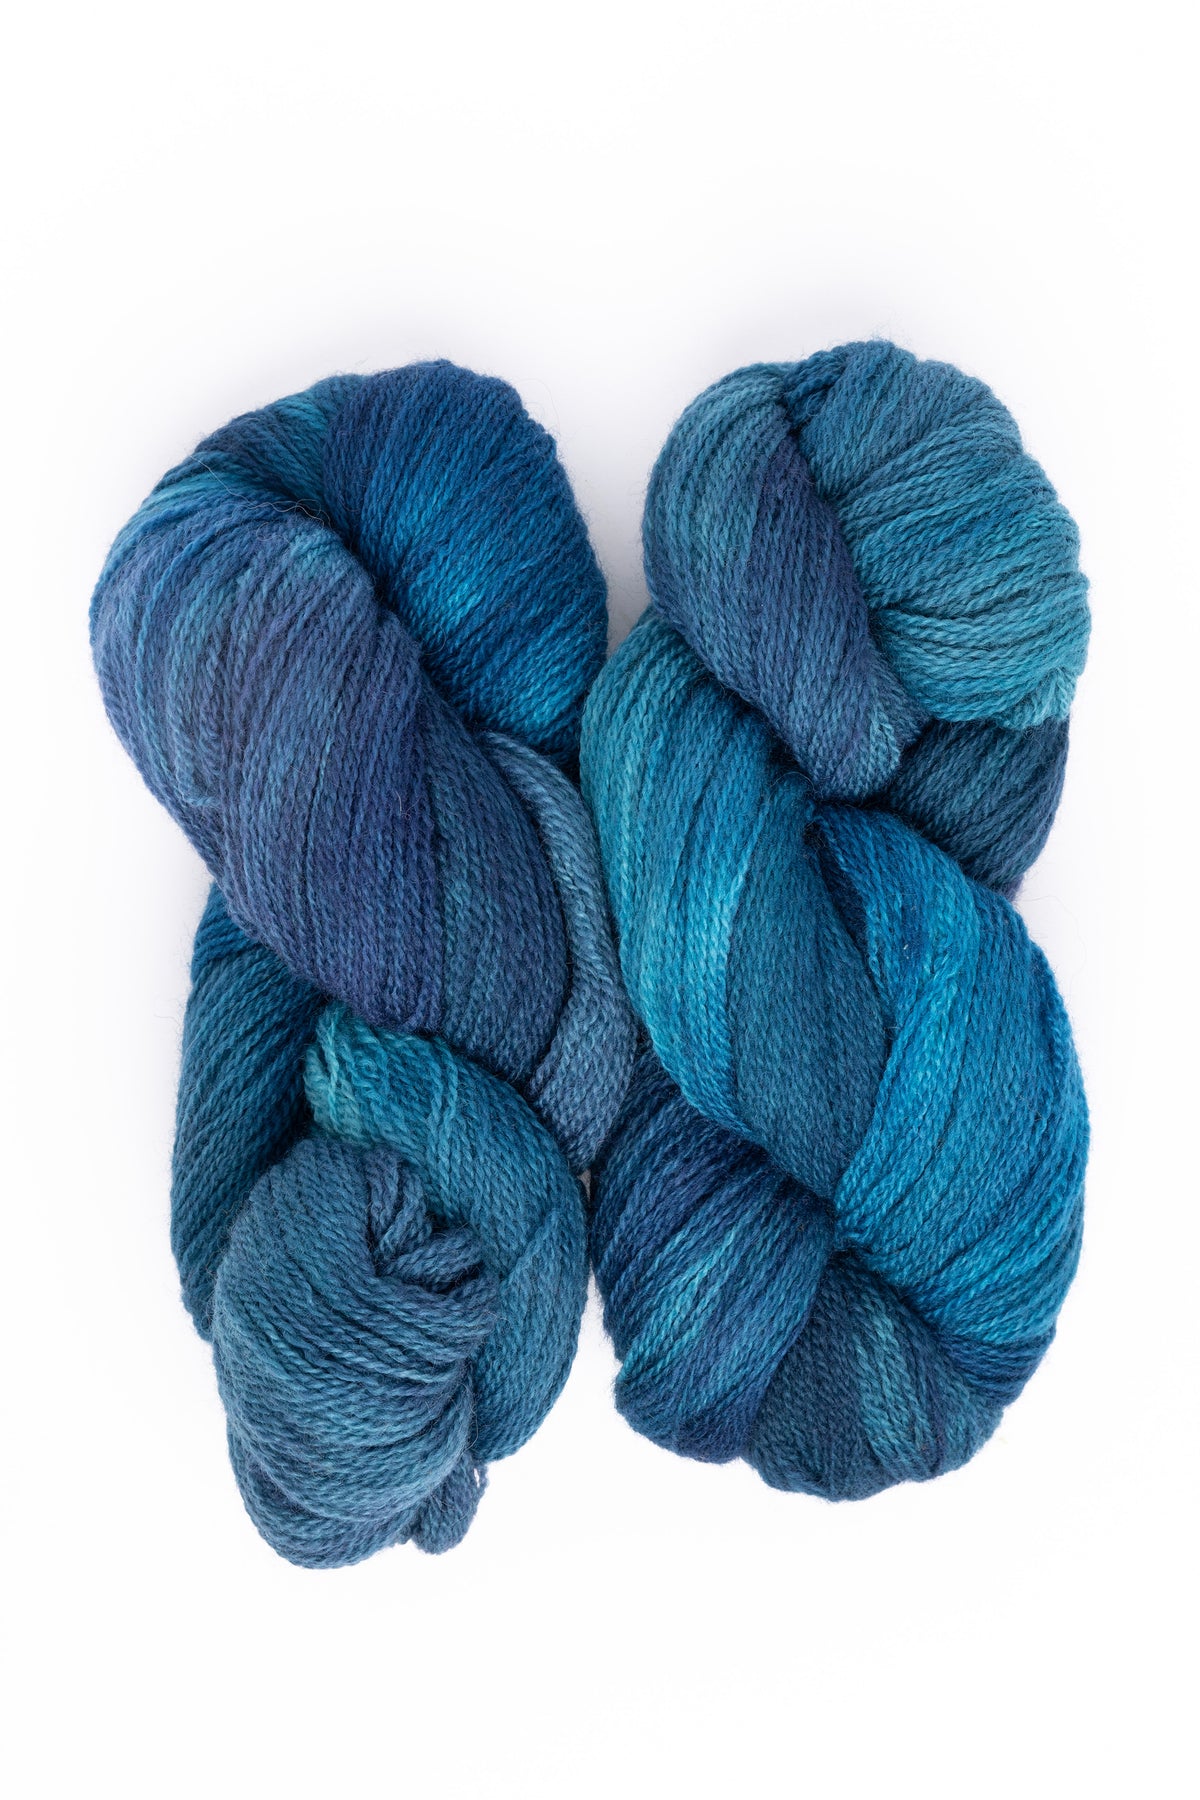 Needle Crafters Feather eyelash yarn, Brilliant Blue, lot of 2 (62 yds ea)